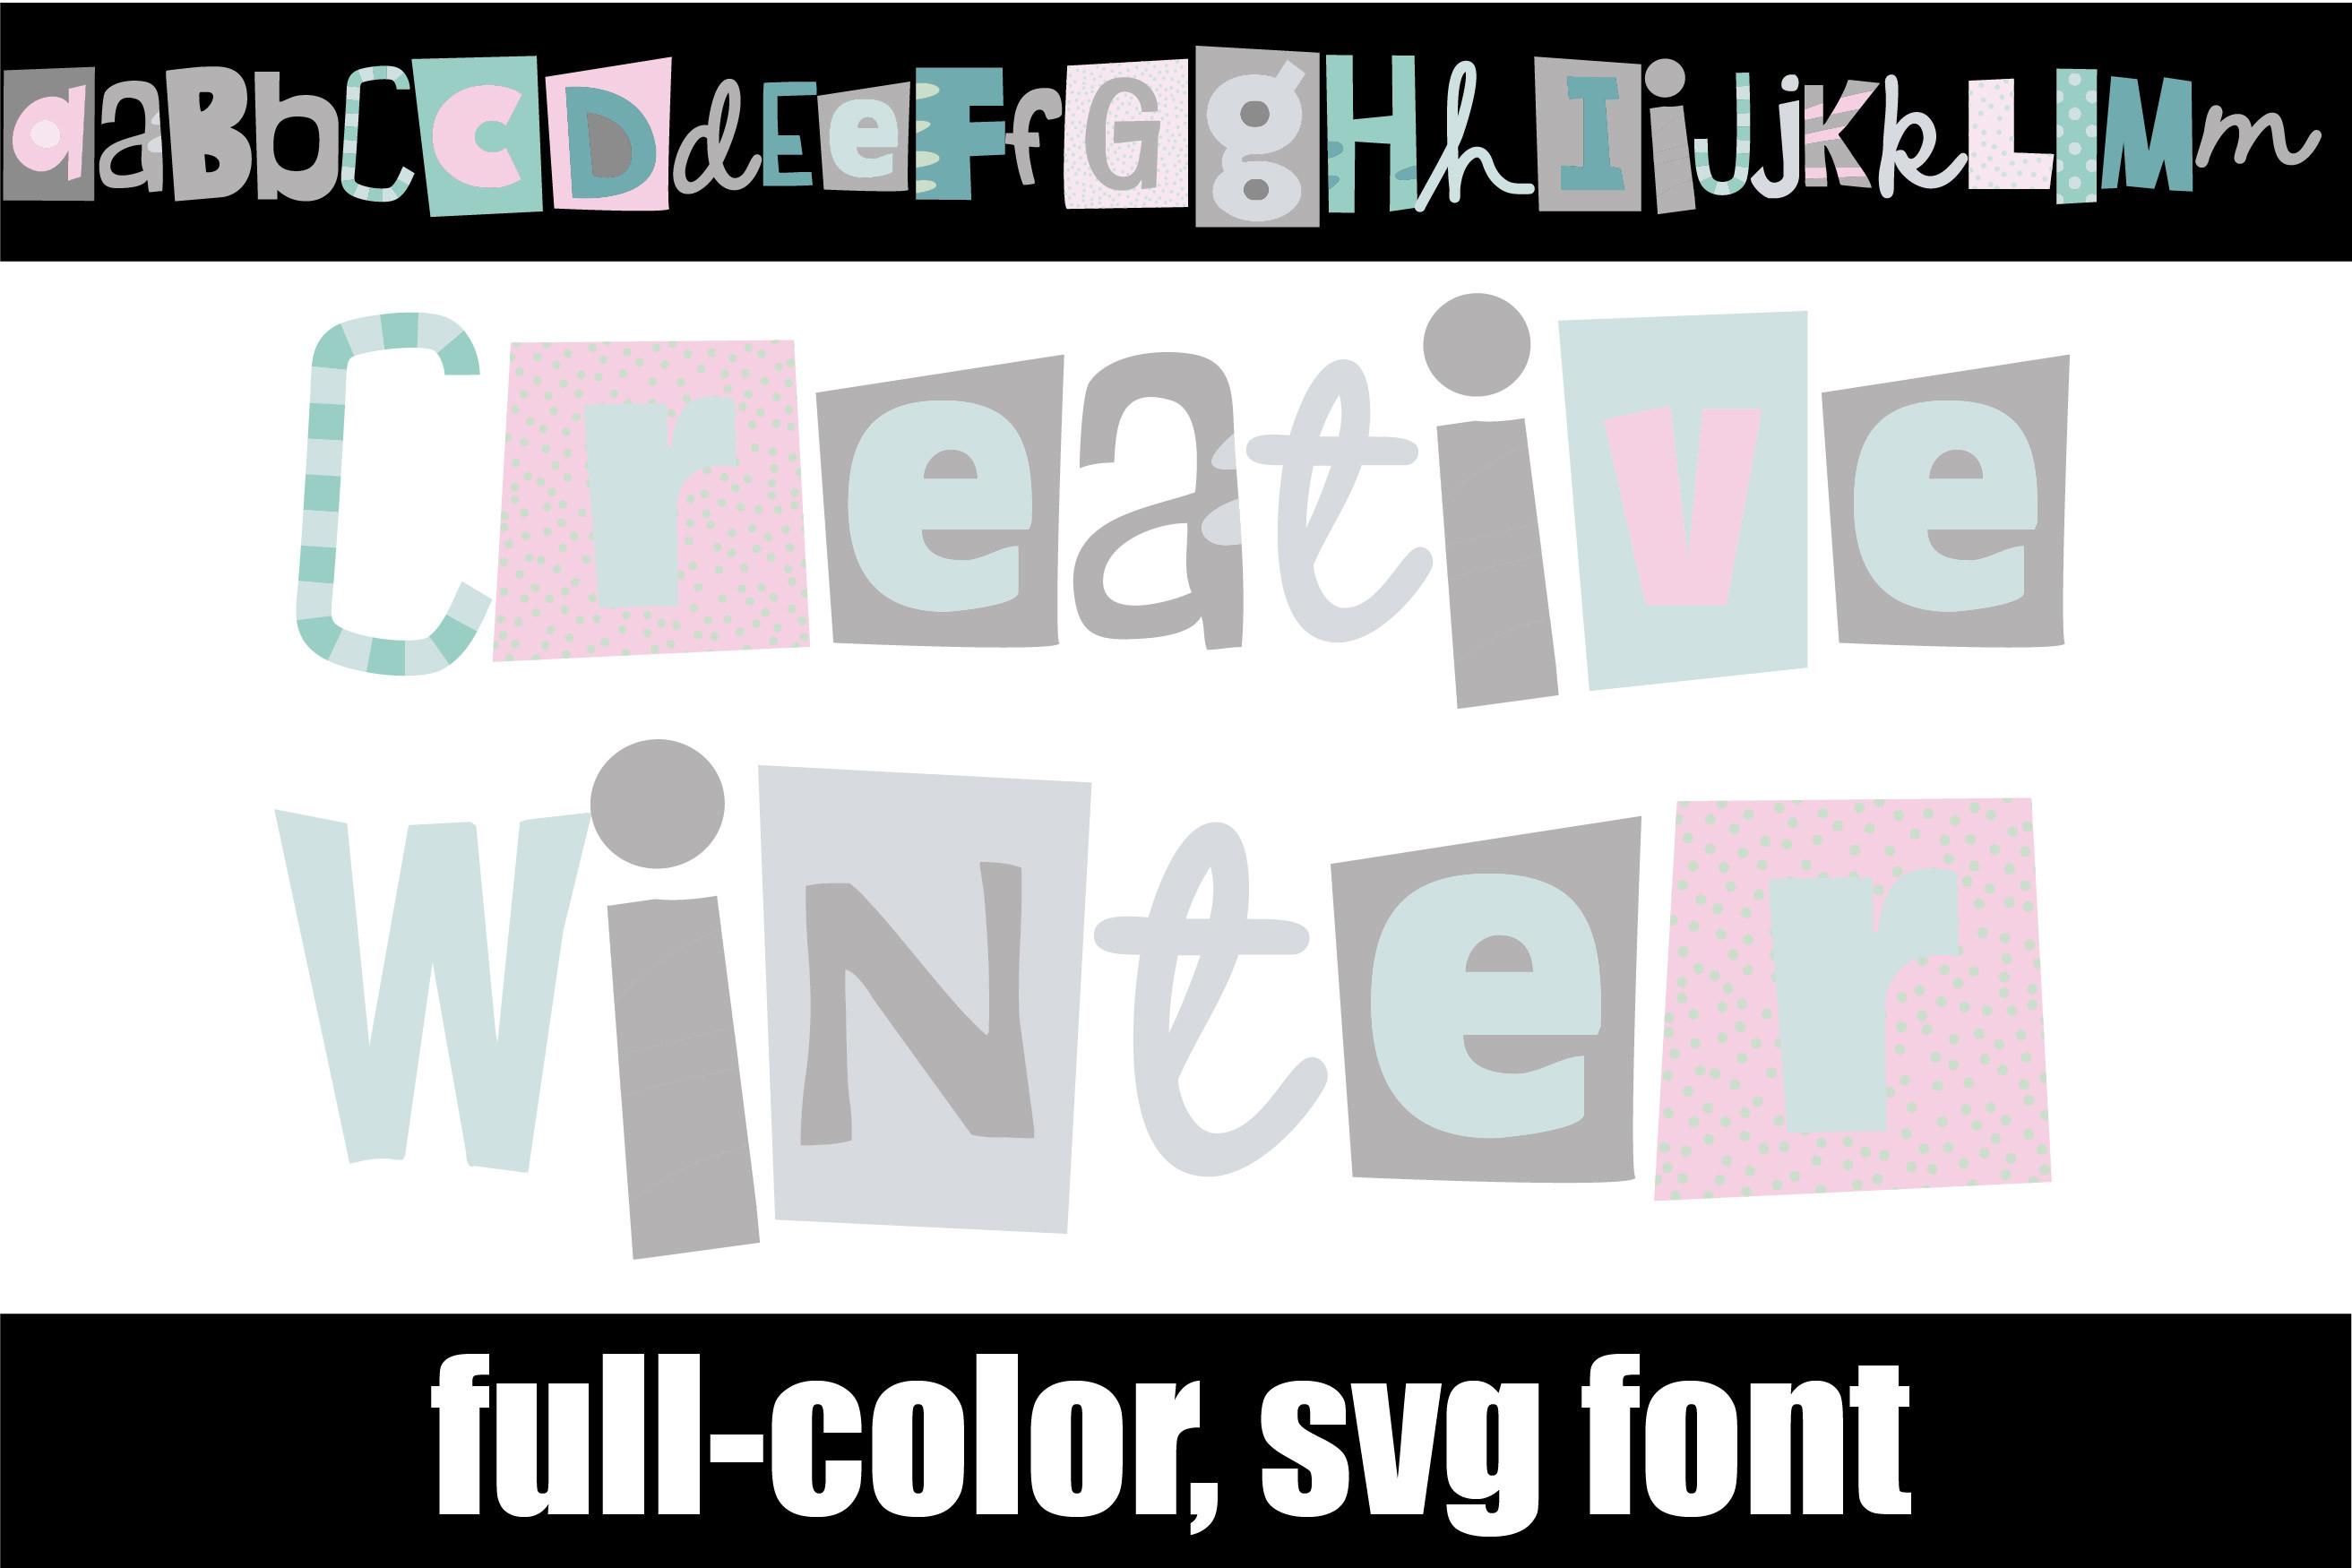 Creative Winter Font